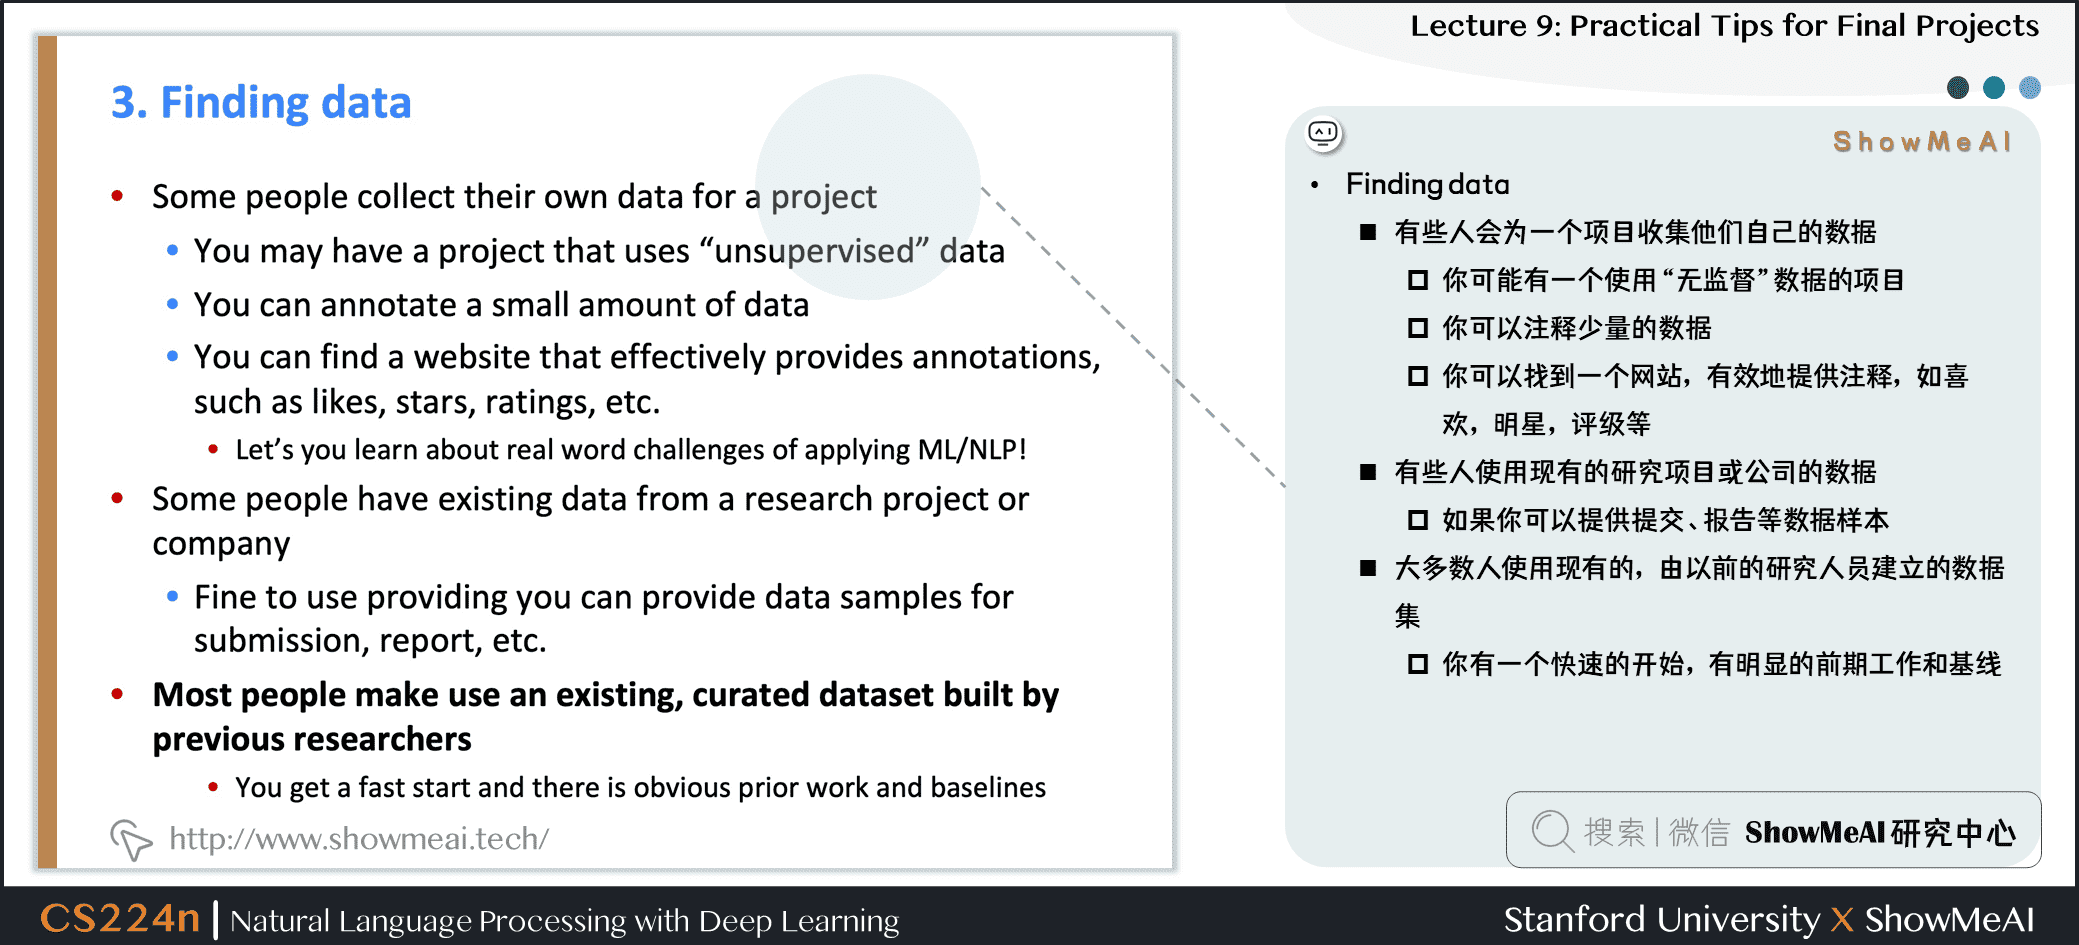 Finding data